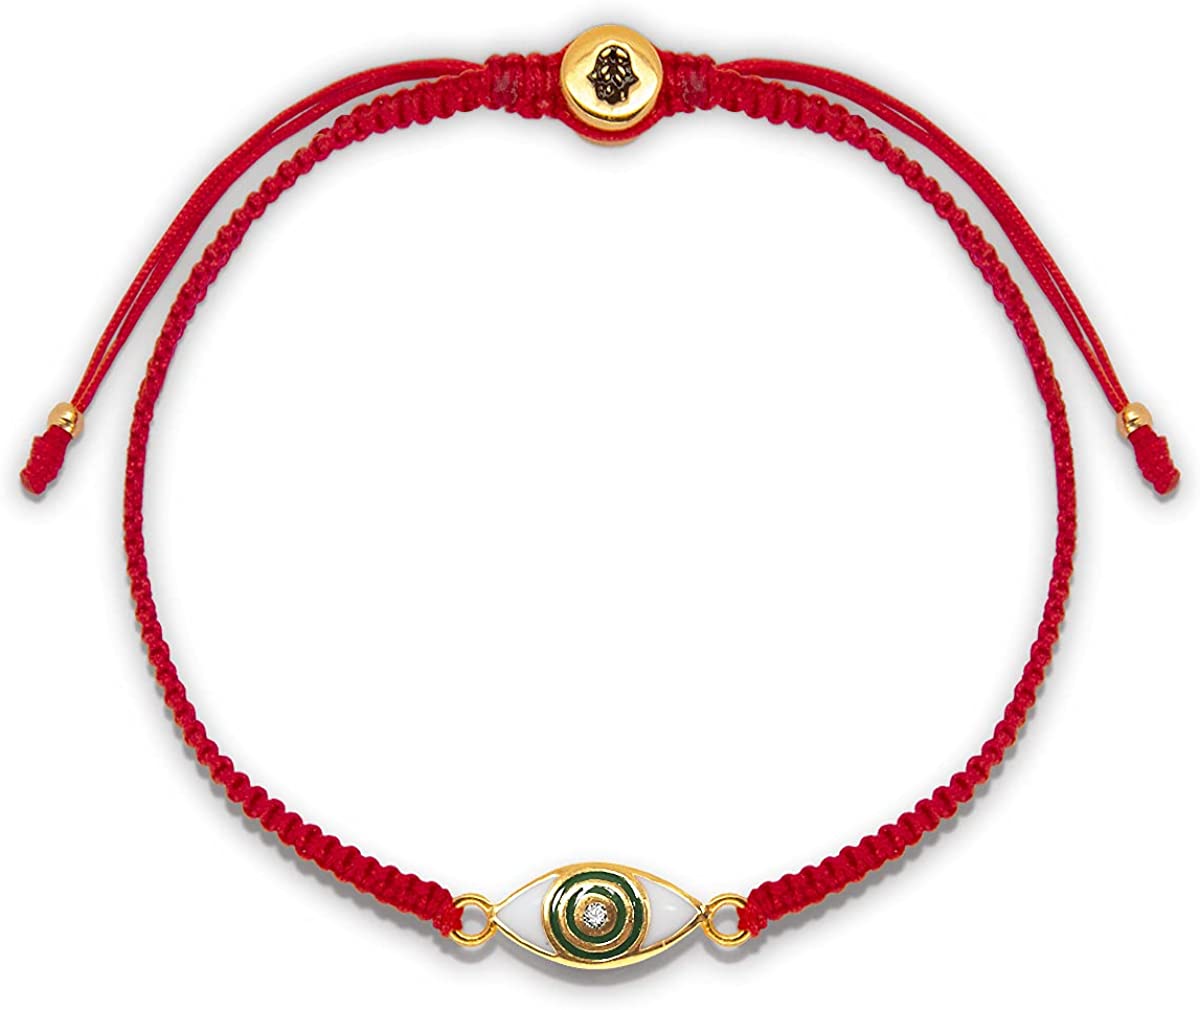 Karma and Luck - Spiritual Cleansing - Women's Red String Adjustable Bracelet Handmade in Bali